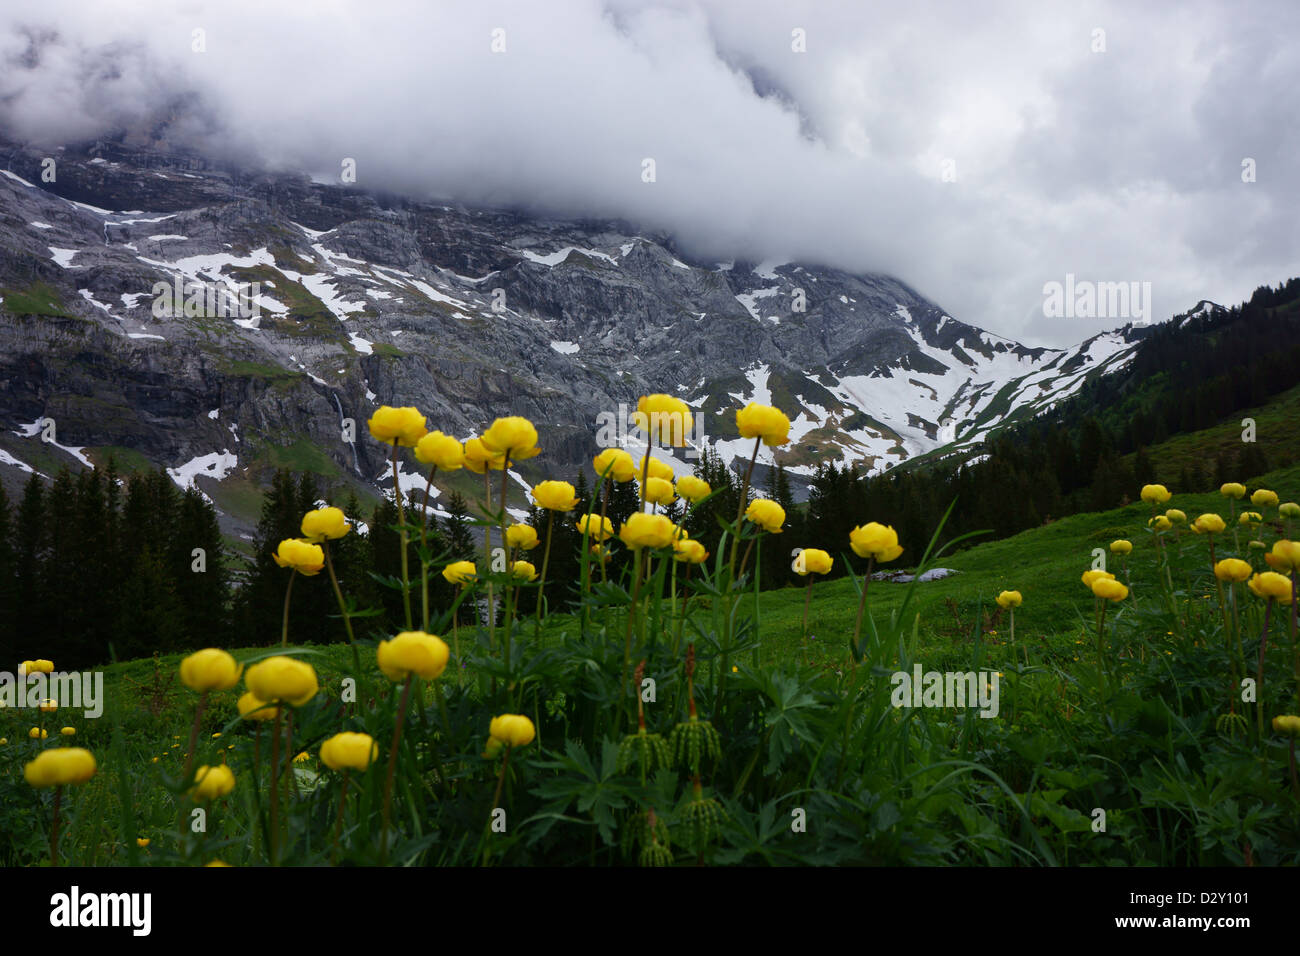 El Wildflower (Trollis europaeus ranunculacaea) debajo de Grosse Scheidegg, Alpes Berneses, Suiza Foto de stock